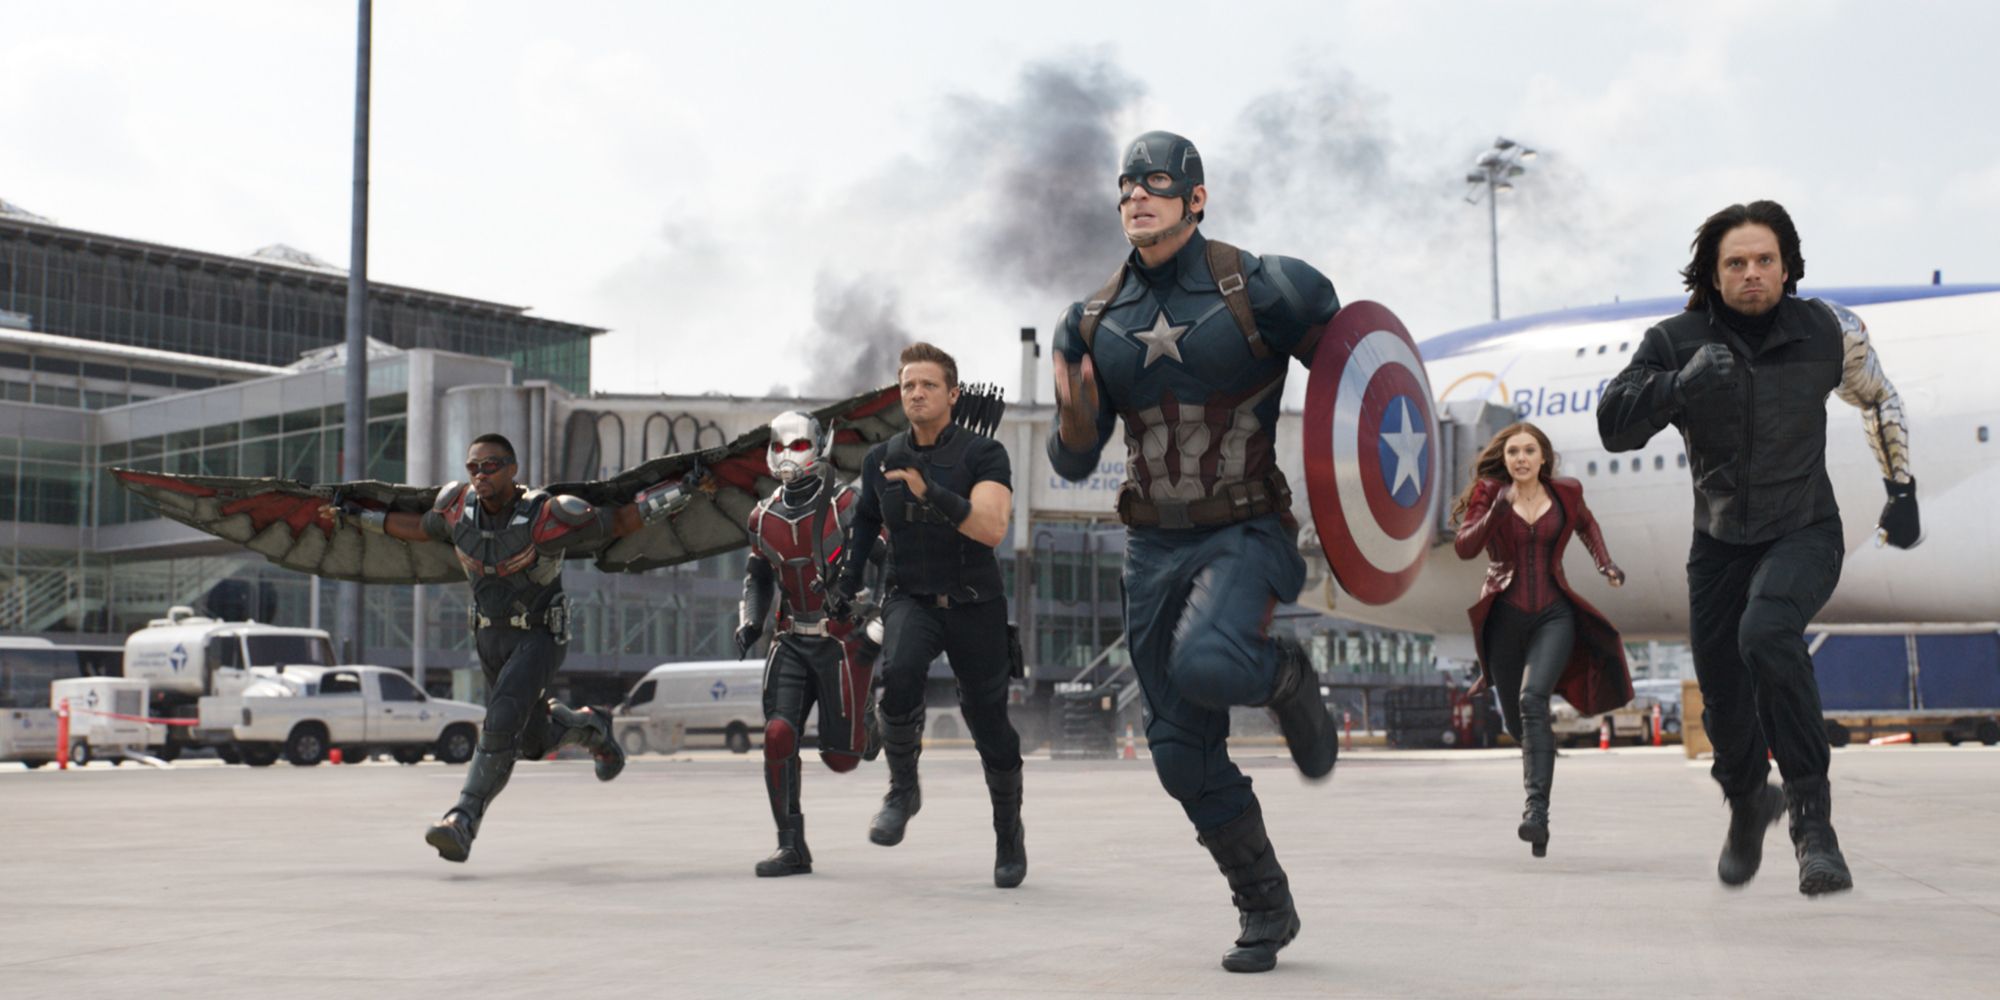 Captain America's team in the airport battle of Captain America: Civil War